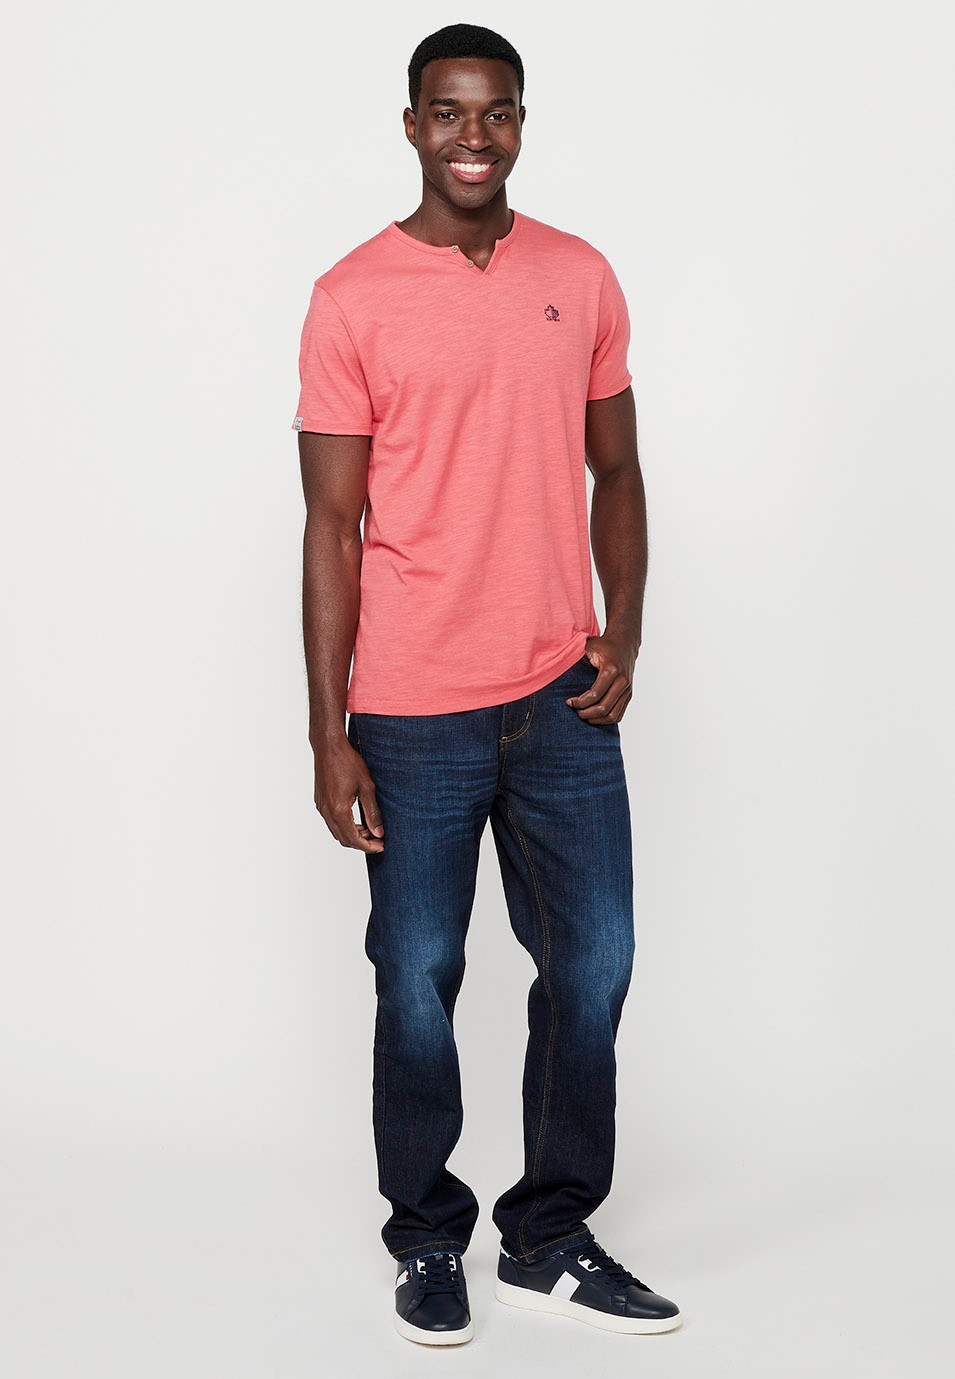 Basic short-sleeved cotton T-shirt, V-neck with button, pink color for men 5